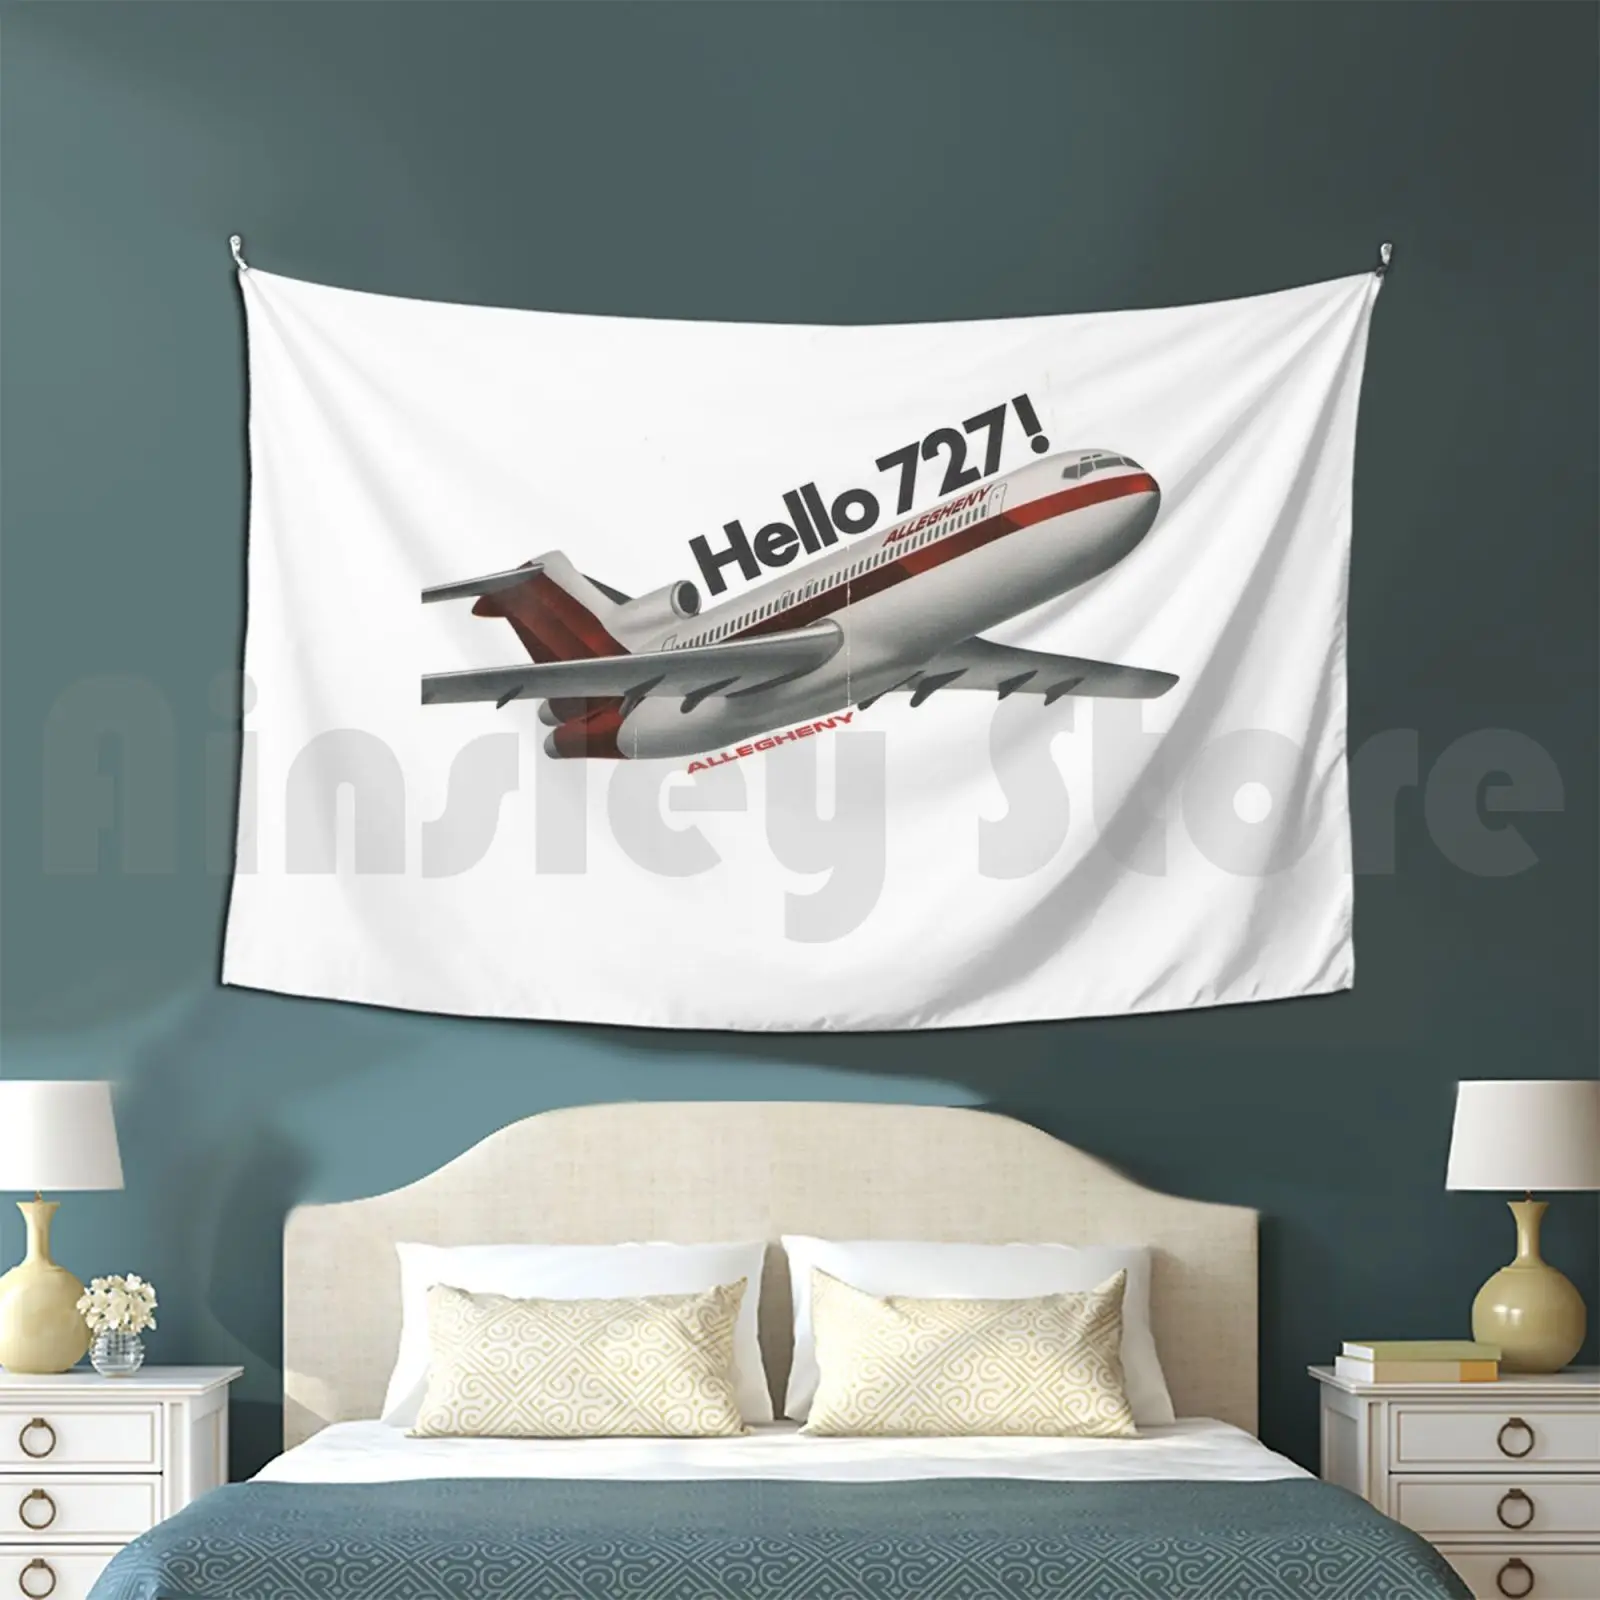 Гобелен Здравствуйте 727!-Боинг 727 дизайн 3112 Боинг B727 авиационный самолет |